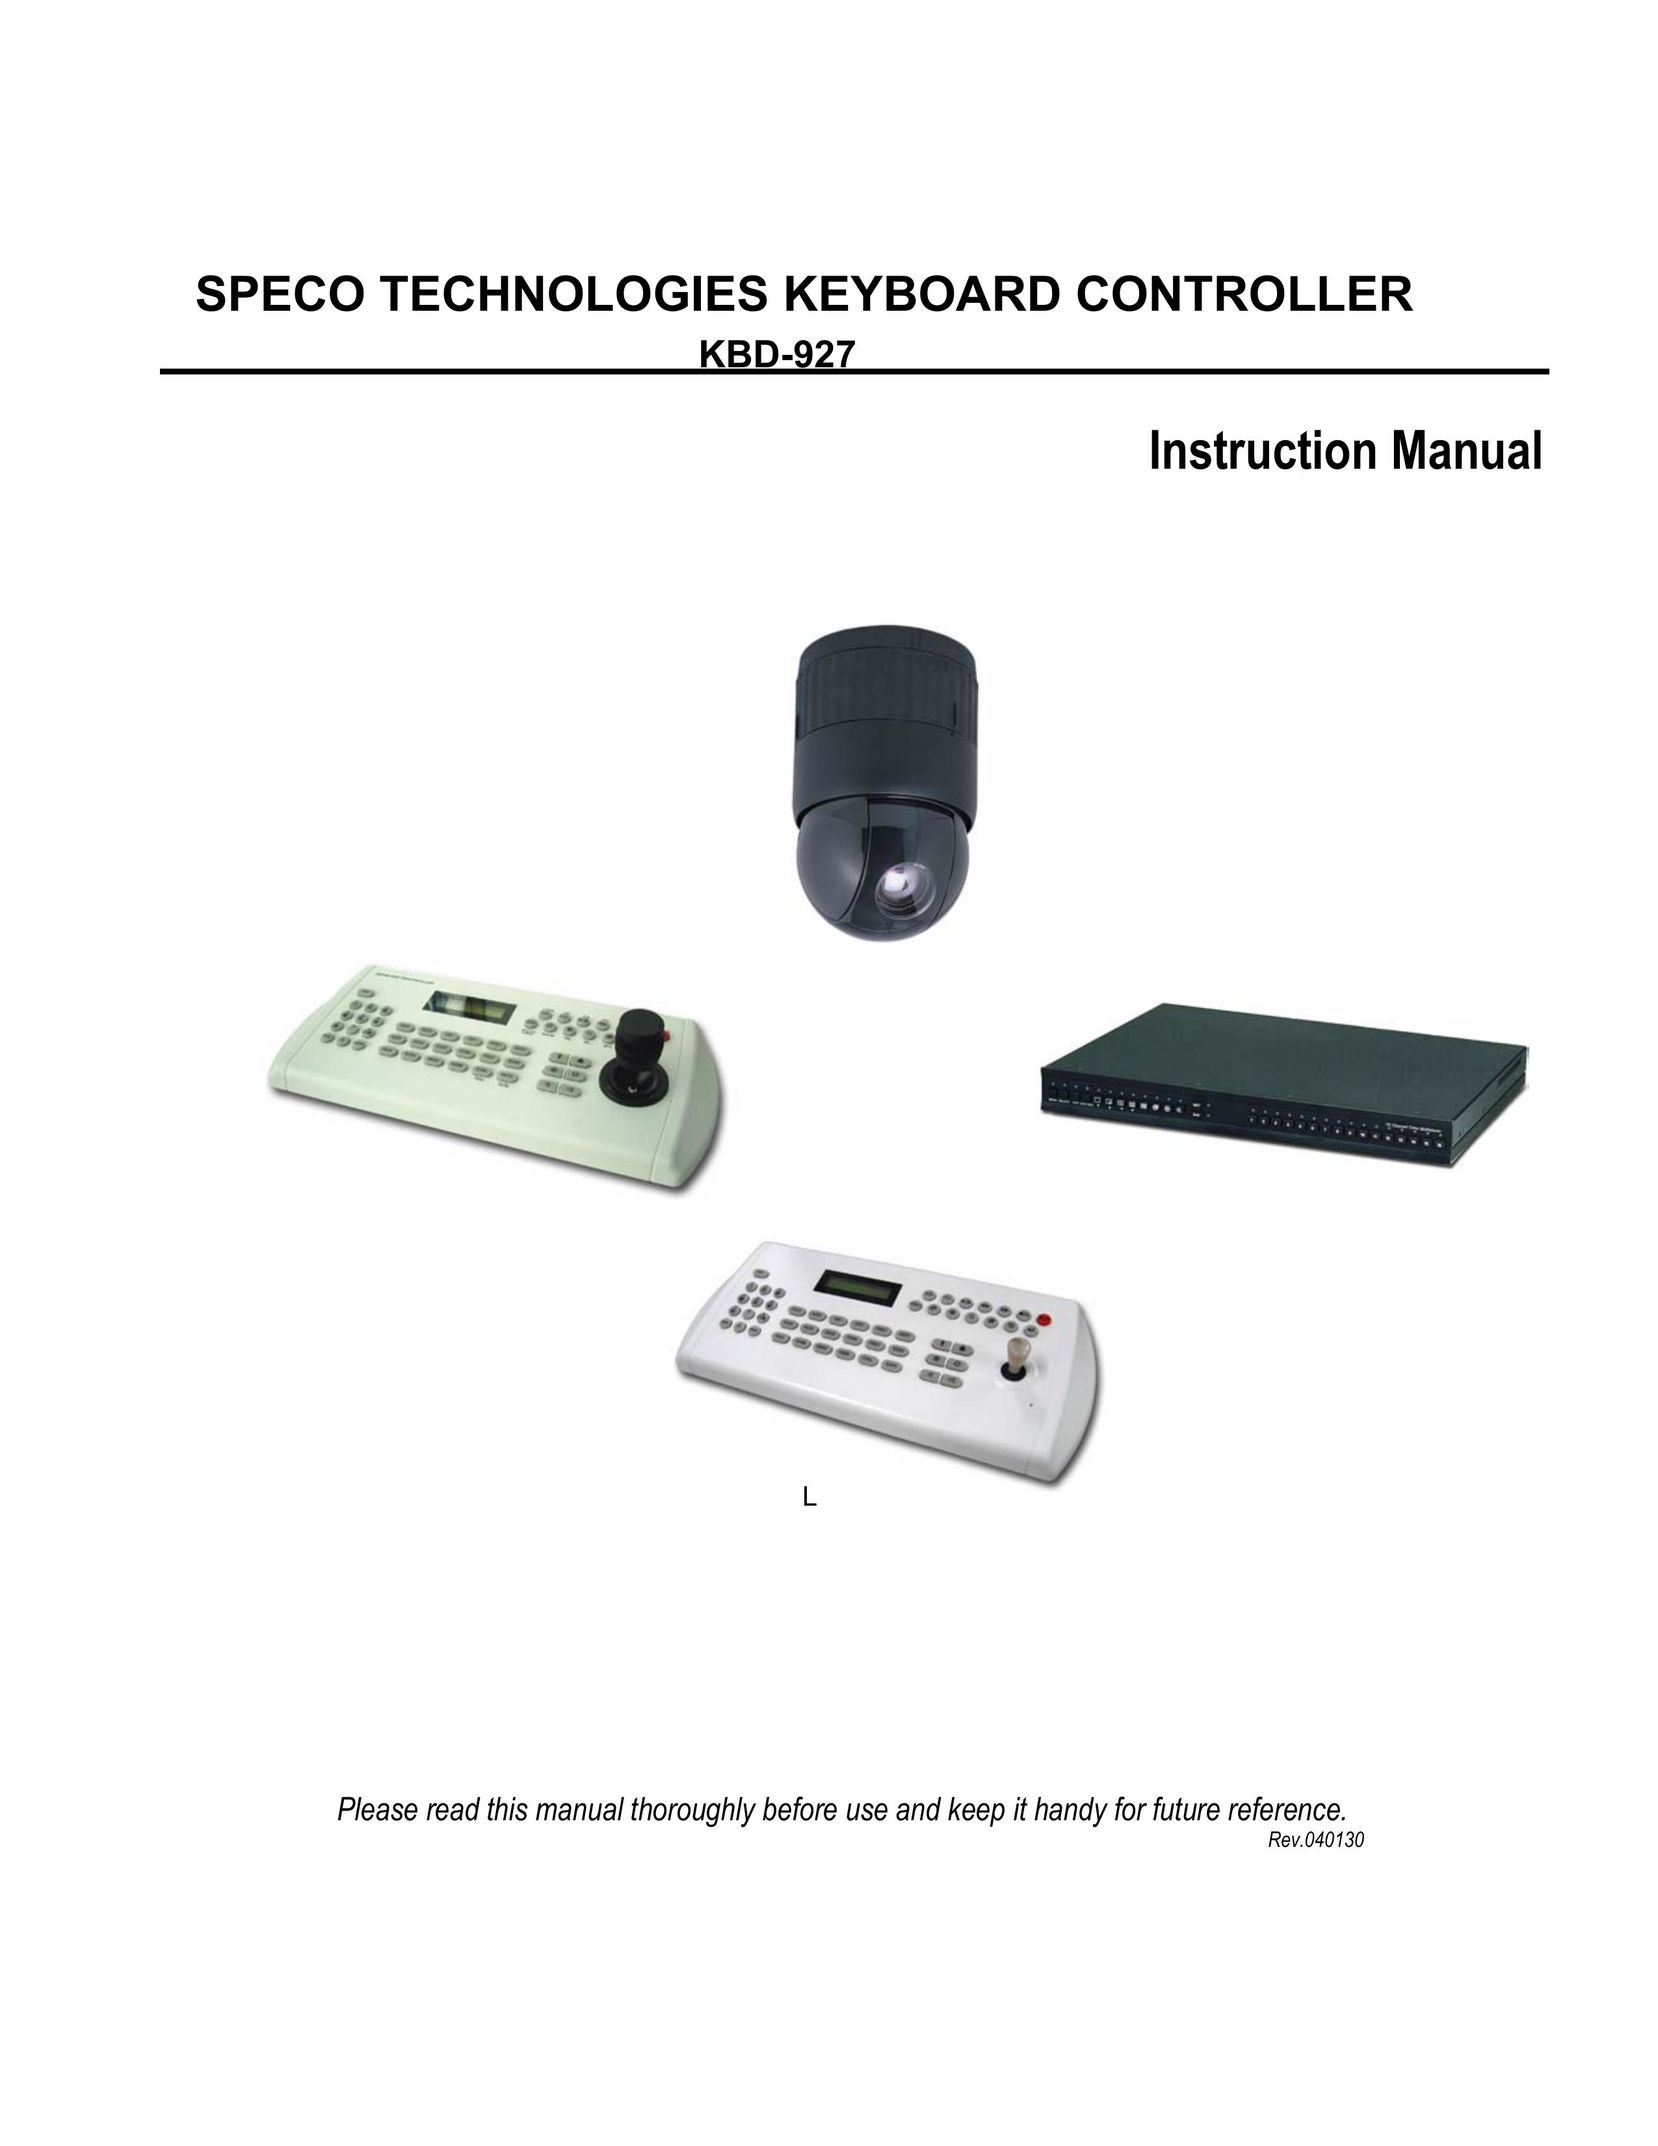 Speco Technologies KBD-927 Mouse User Manual